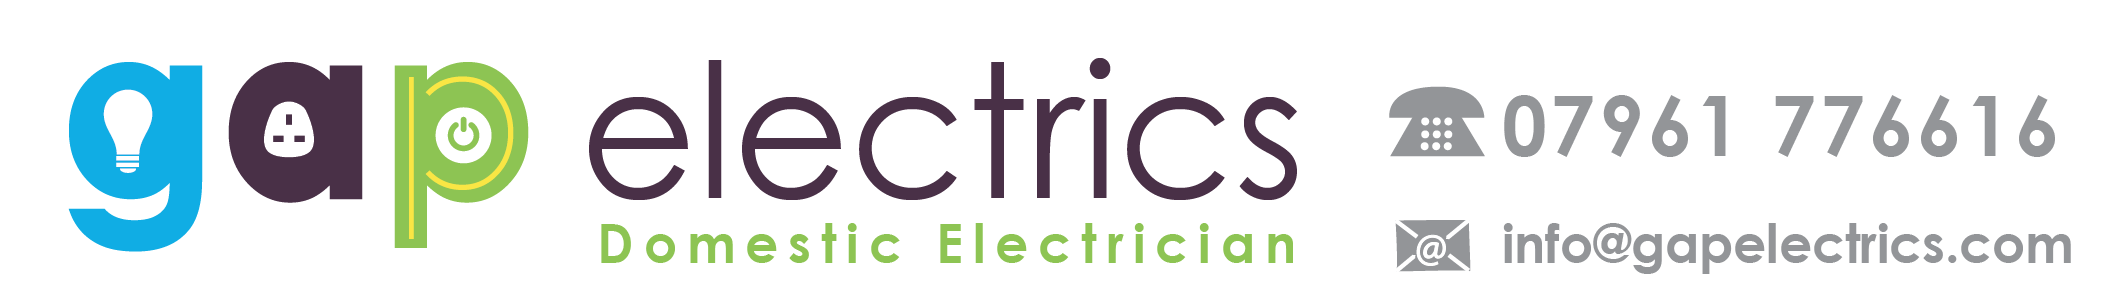 GAP electrics logo banner